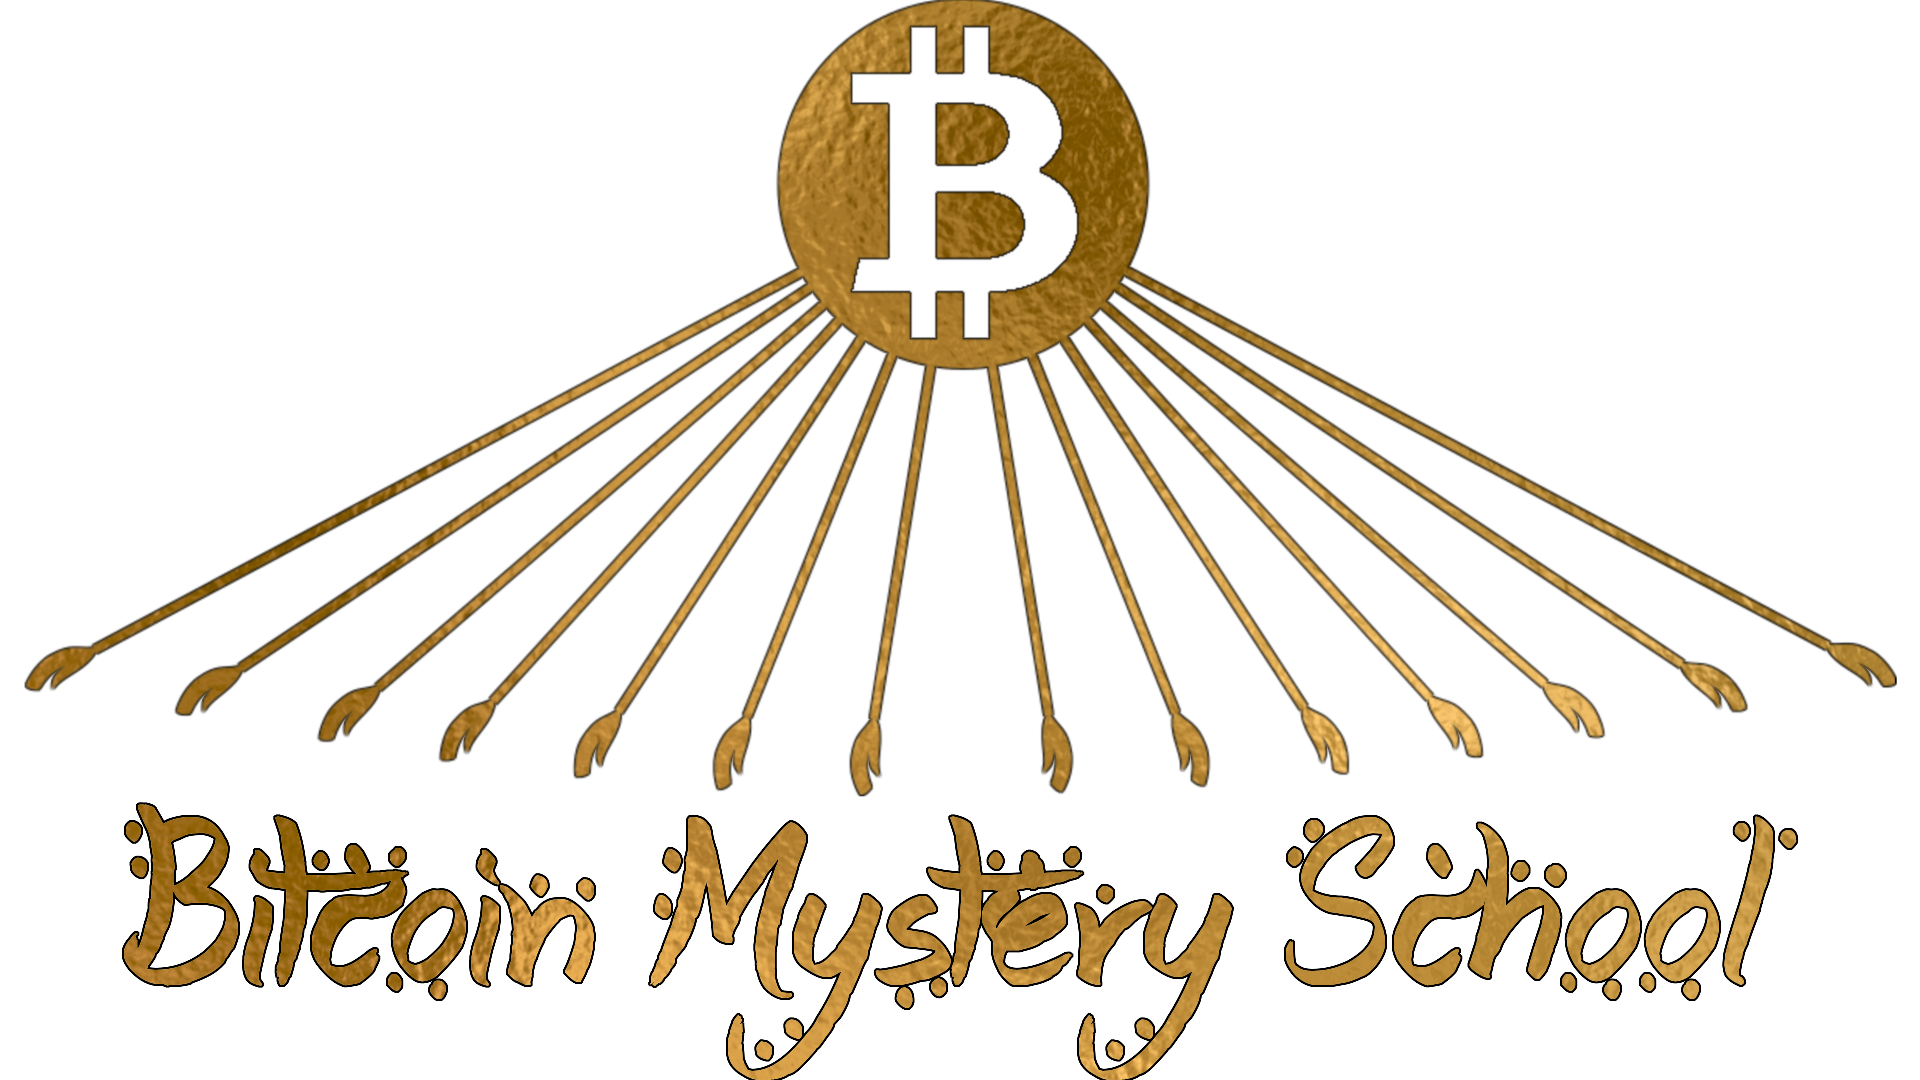 Bitcoin Mystery School